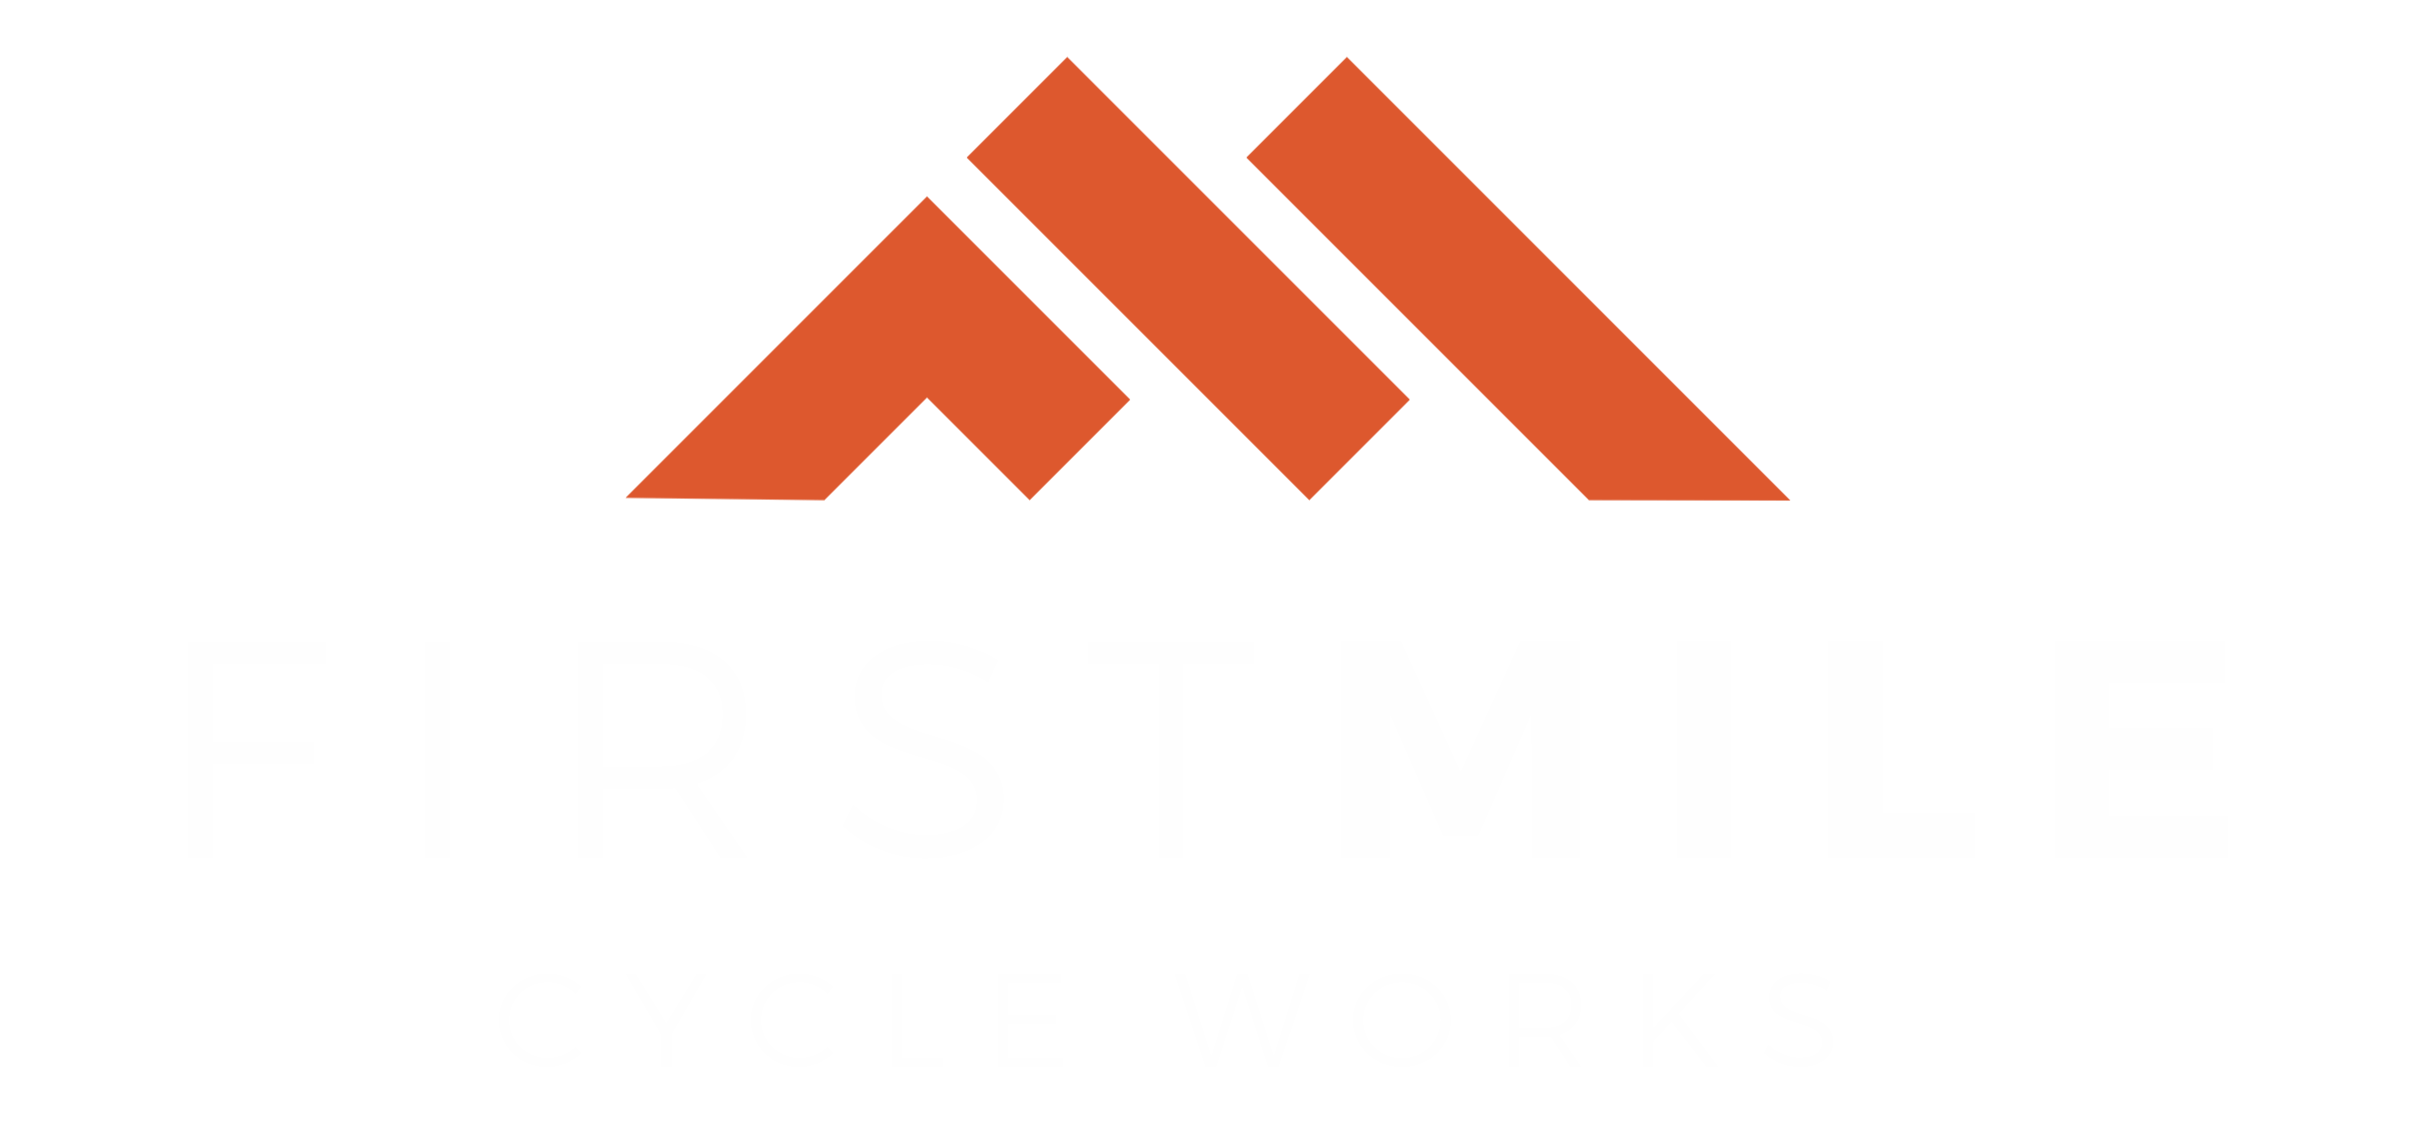 First Mile logo